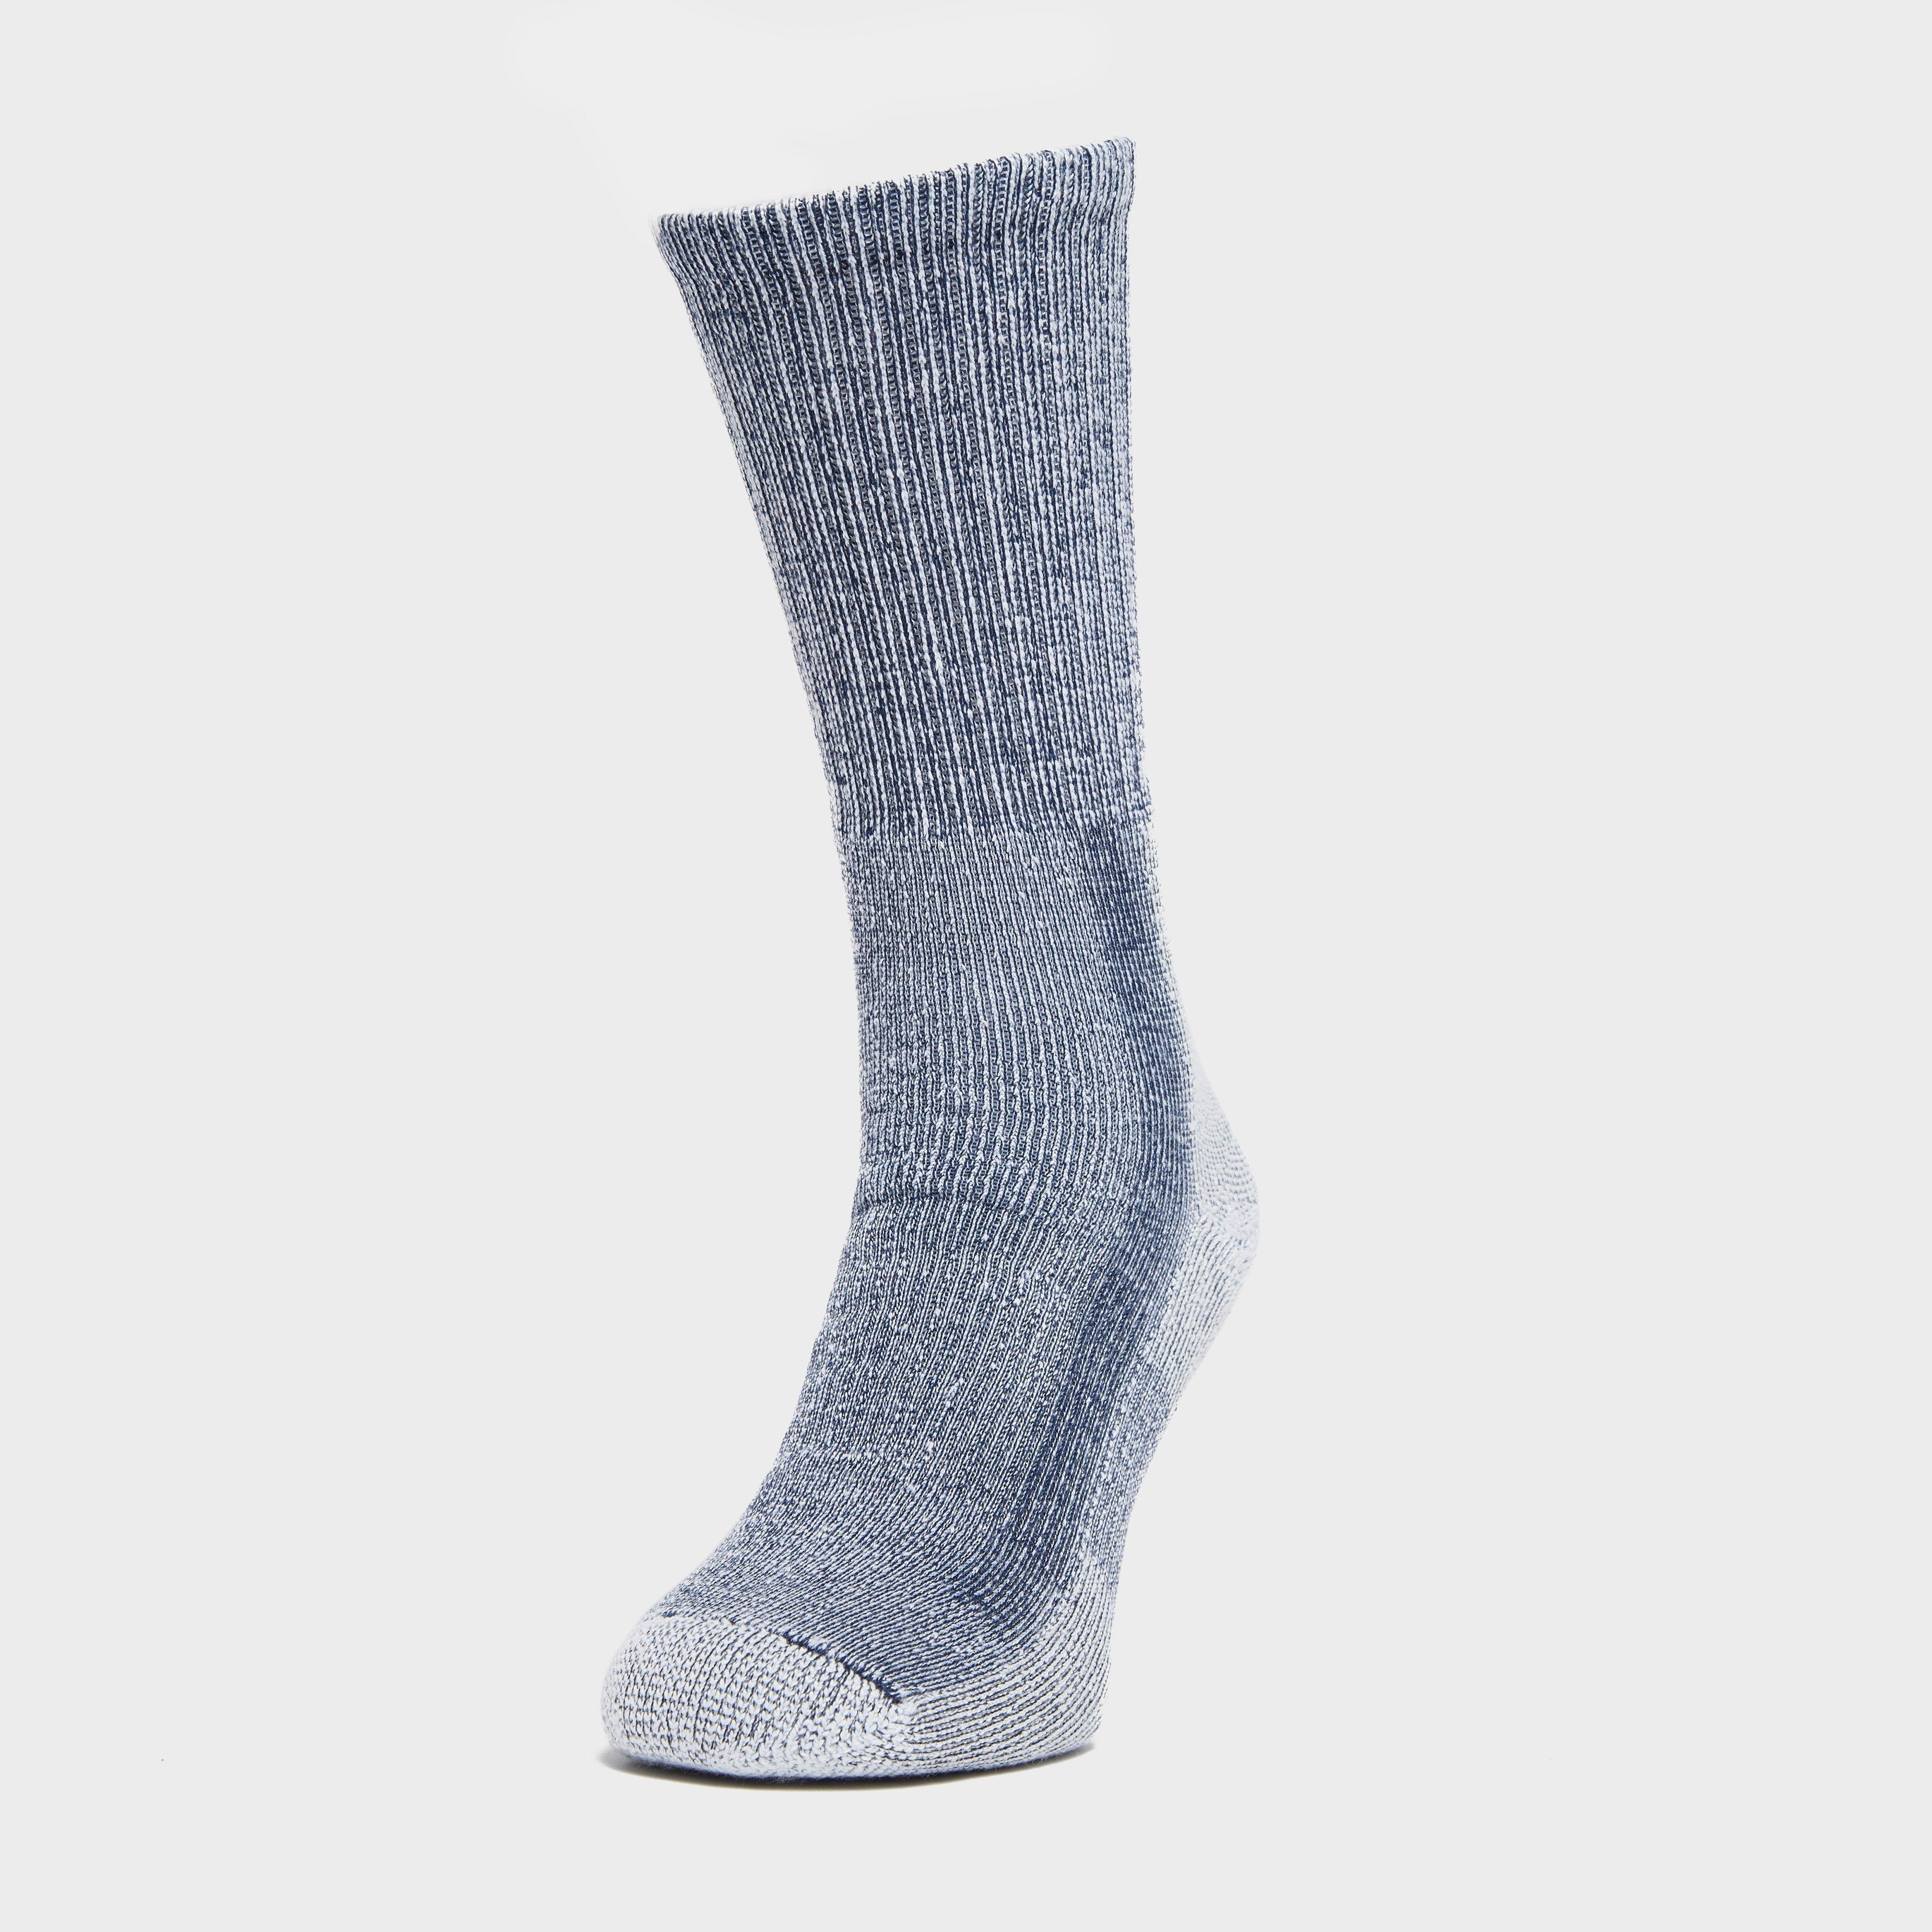 Thorlo Mens Light Hiker Socks - Grey/mens  Grey/mens